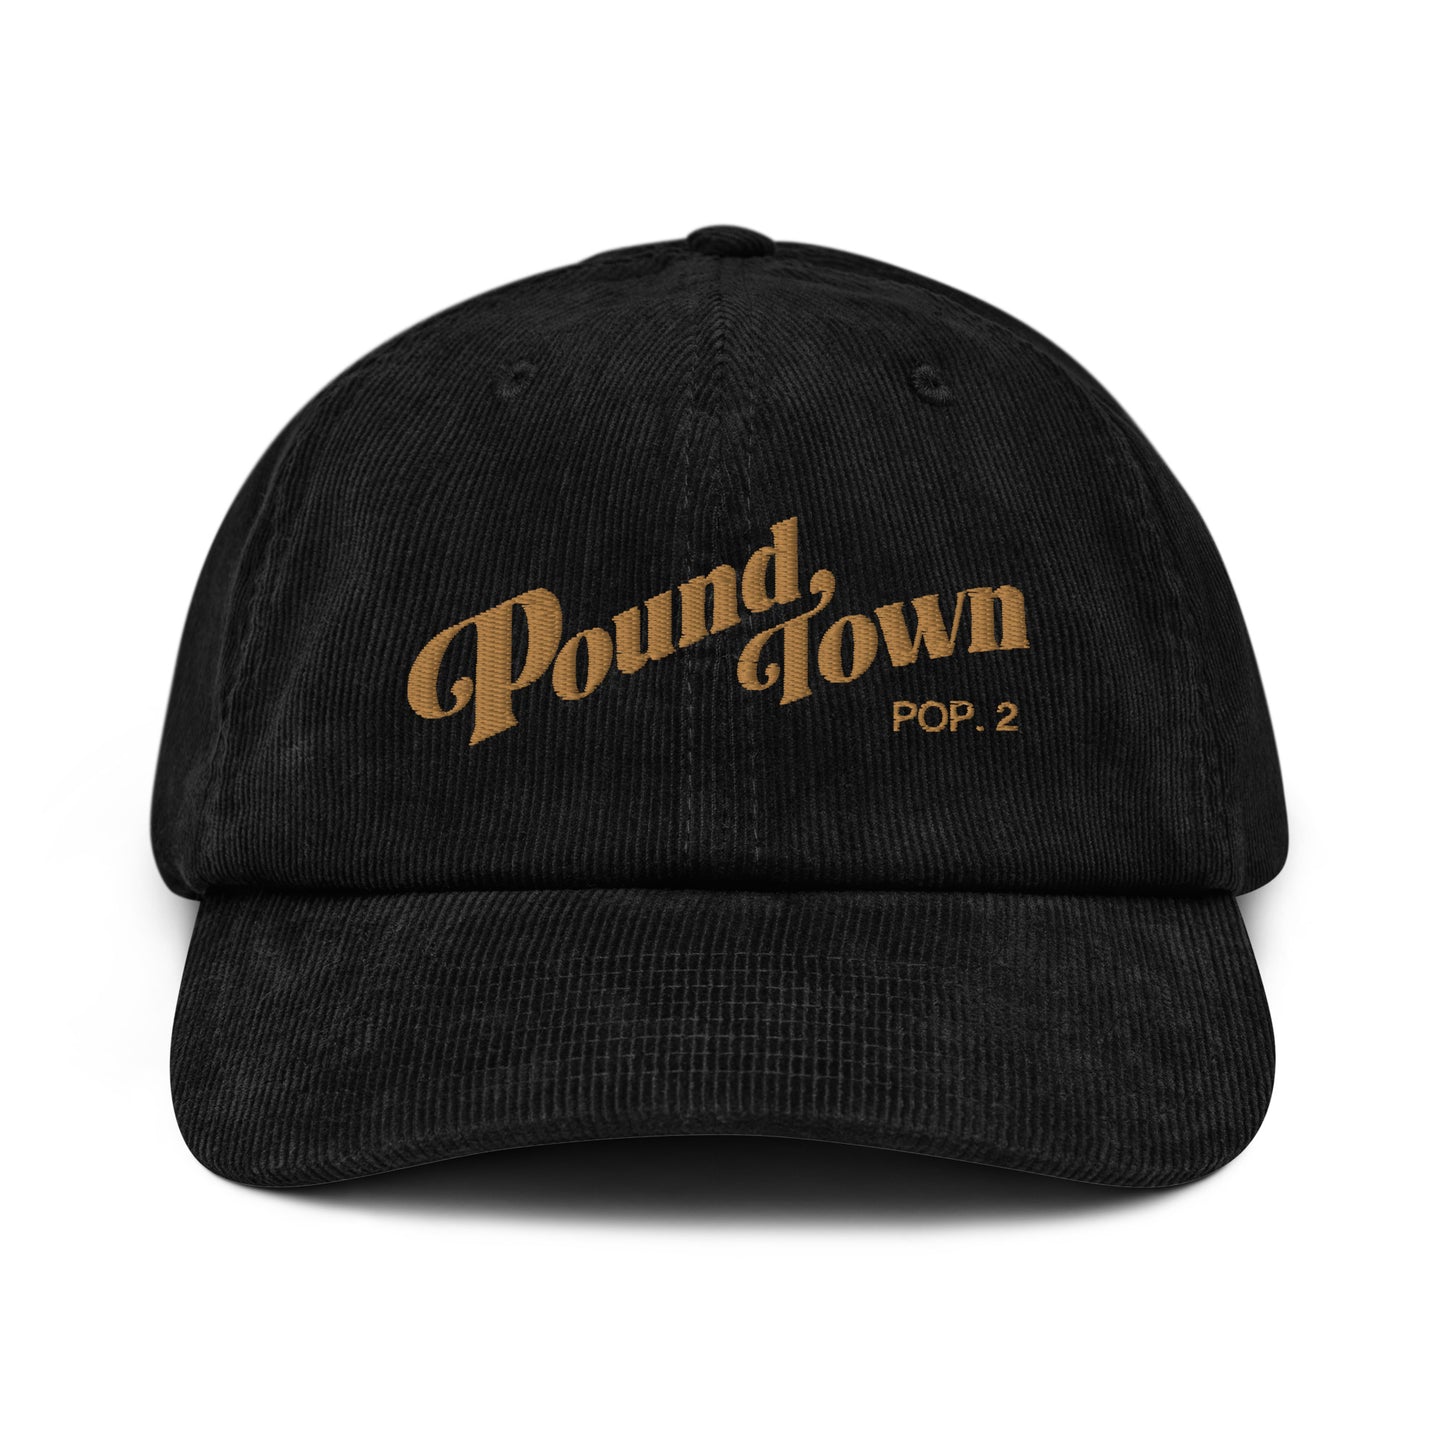 Pound Town corduroy hat